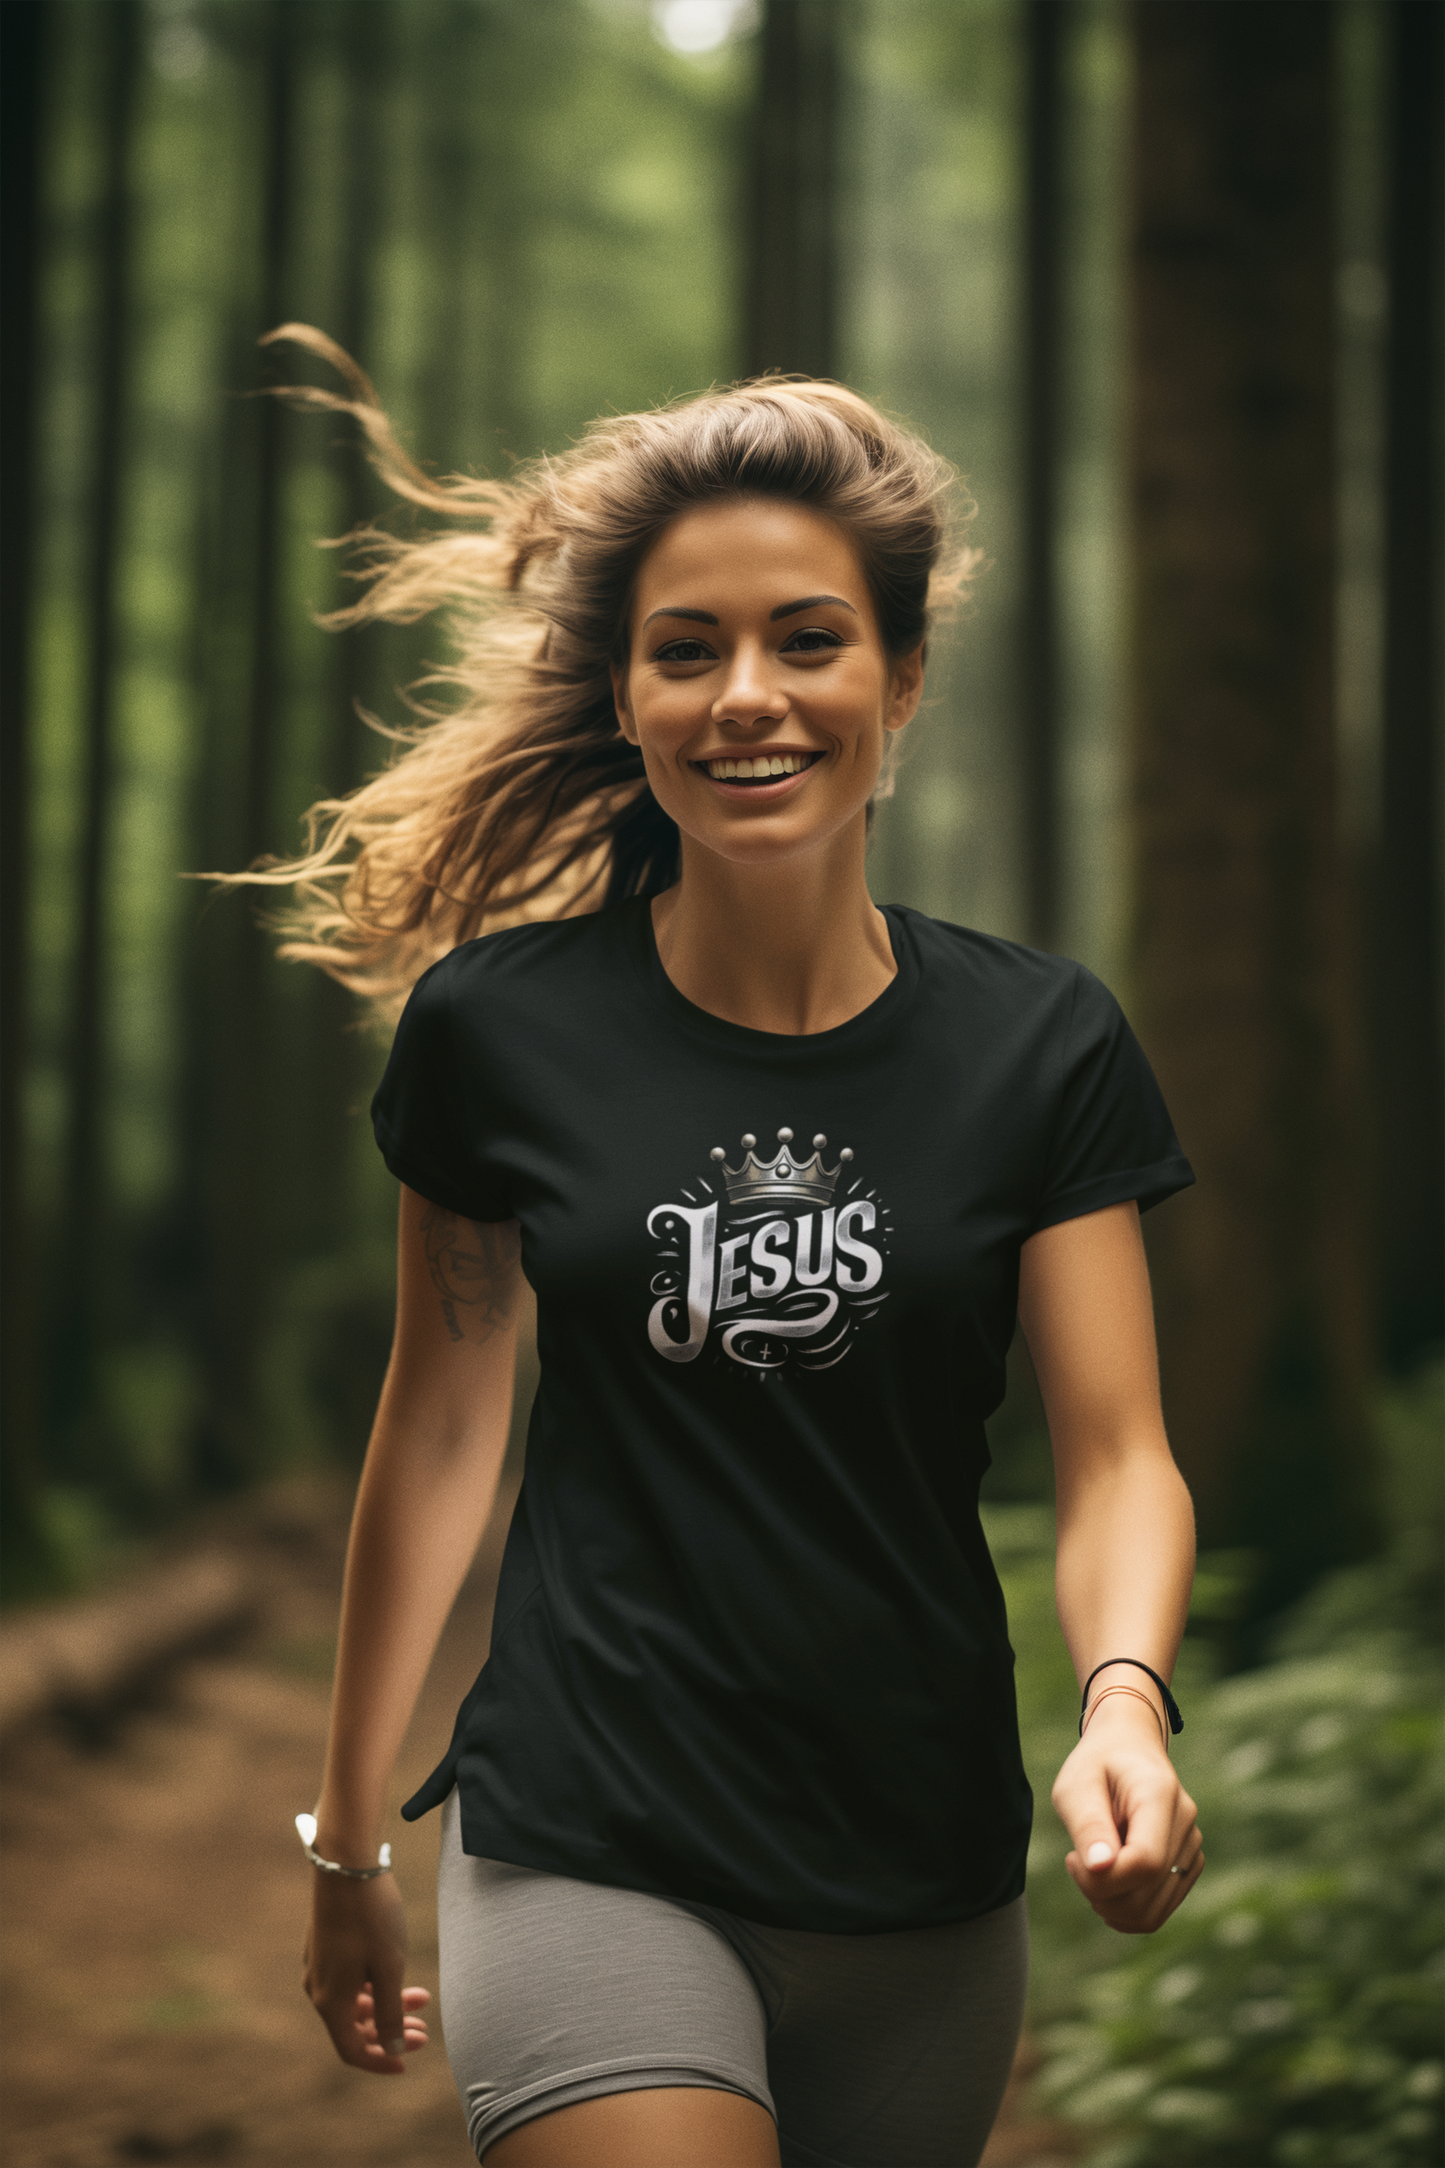 Majestic Representation Jesus Crowned Image Design 2 Unisex Soft Style T-Shirt